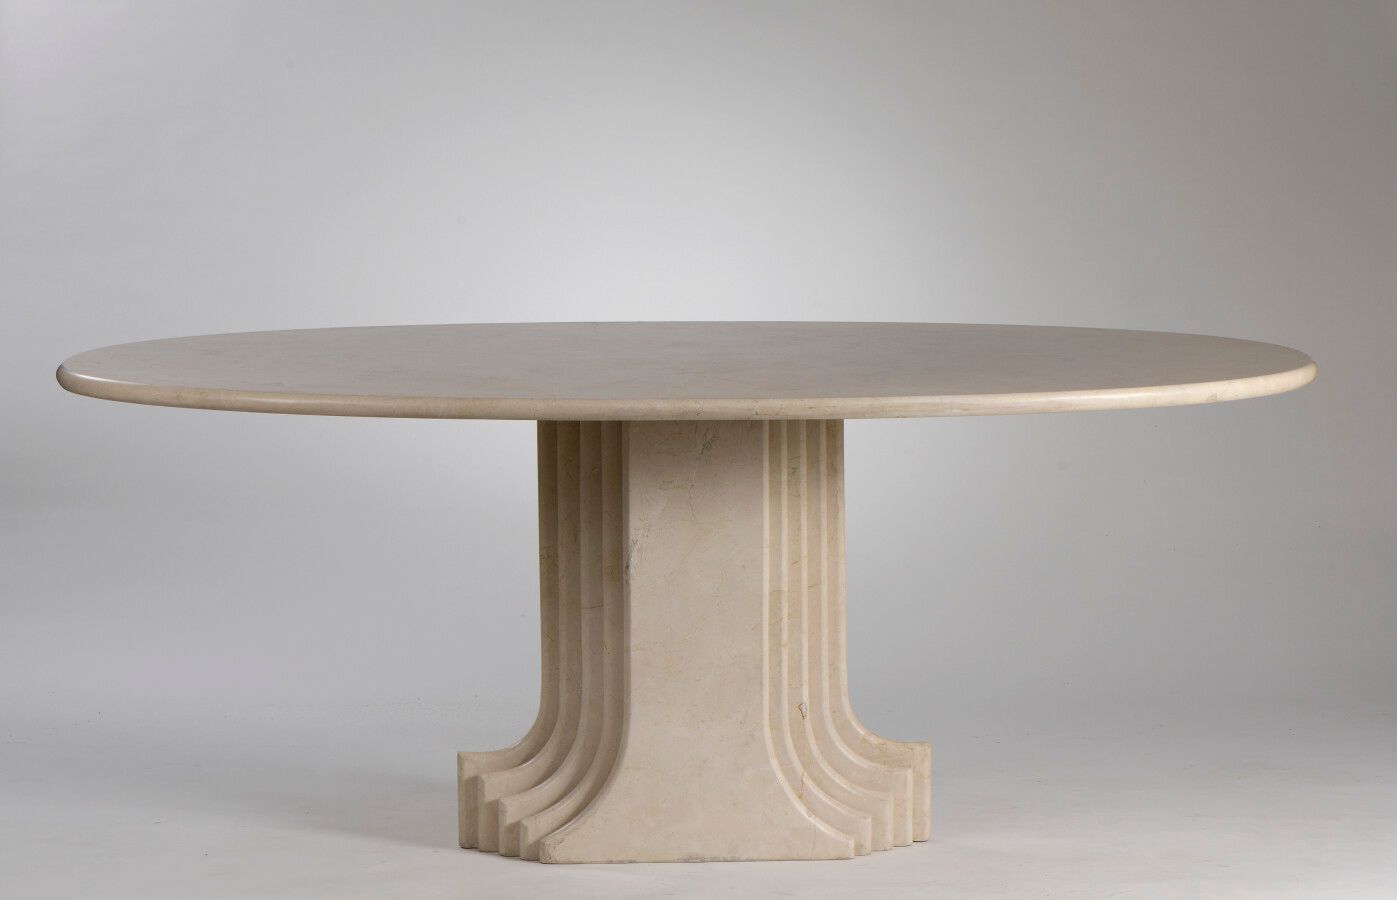 Null 卡洛斯-斯卡帕(1906-1978)

1970年代的西蒙国际版

饭厅桌子

大理石

H.72 cm - D. 100 cm - W. 184 c&hellip;